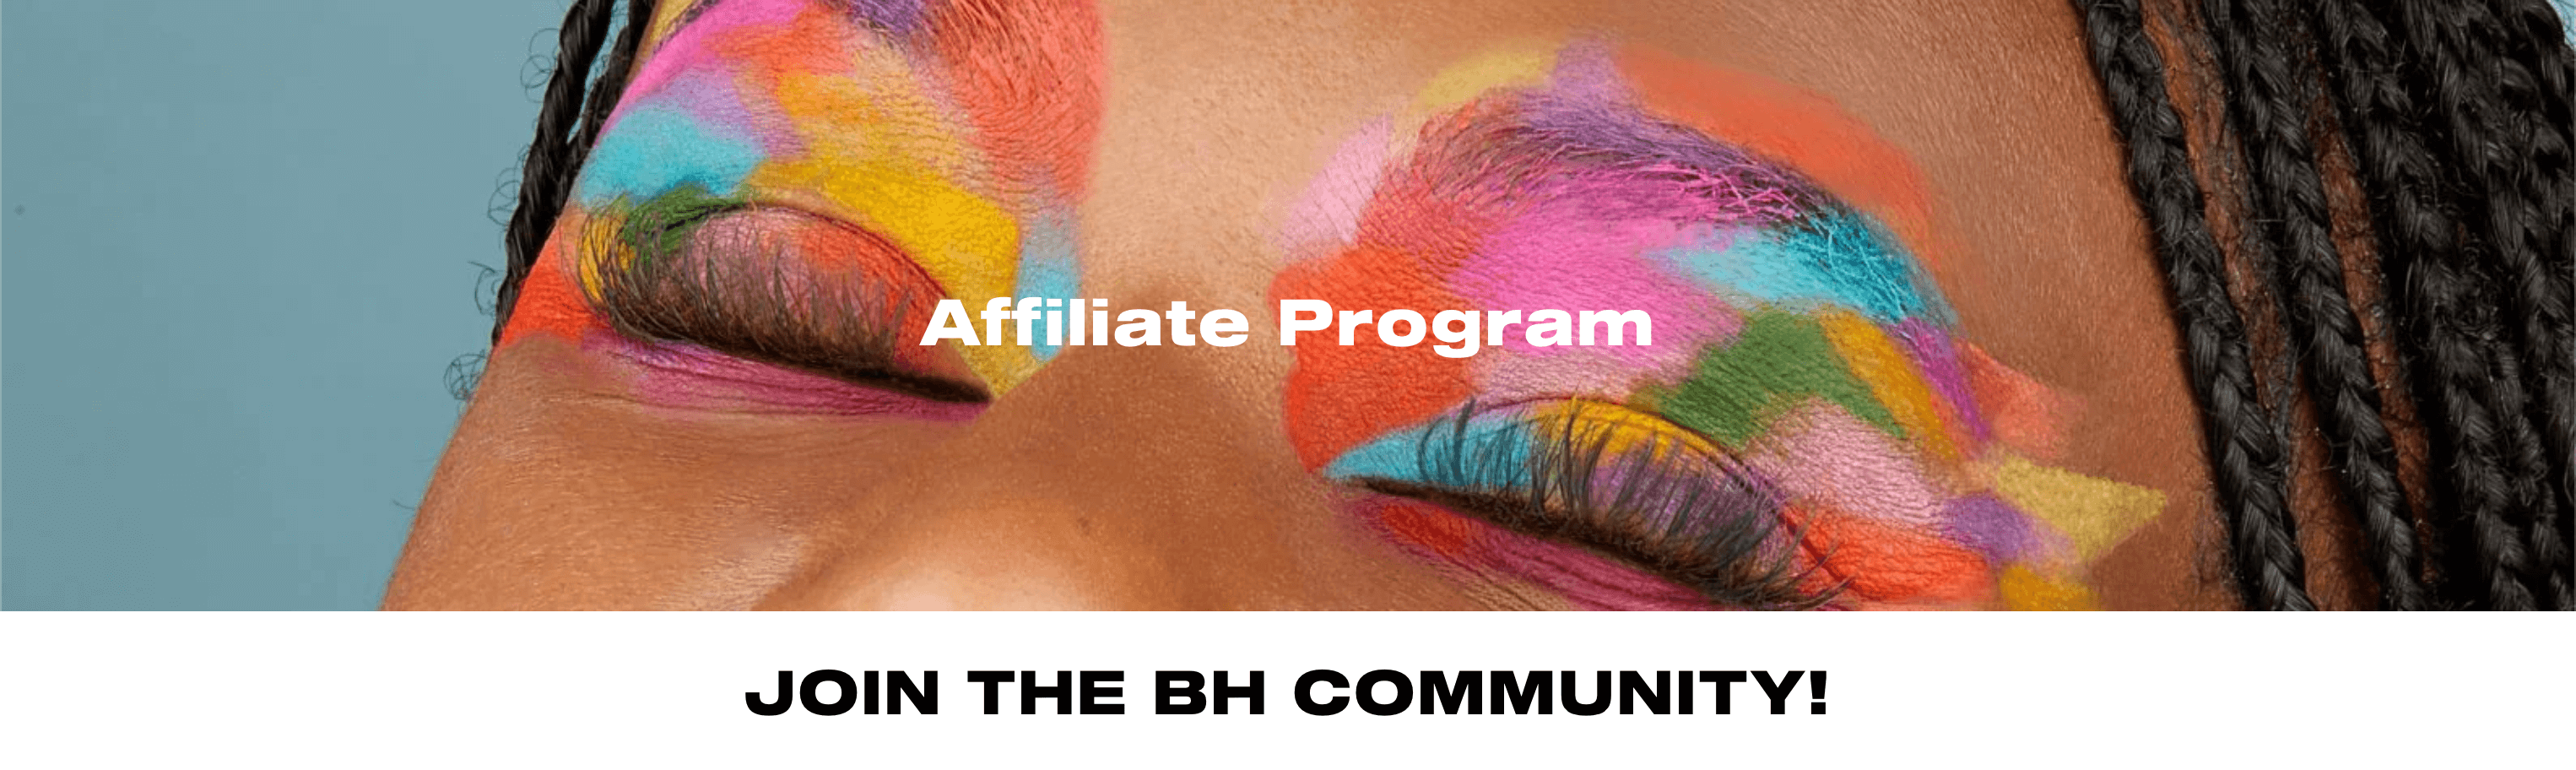 BH Cosmetics Affiliate Program's homepage